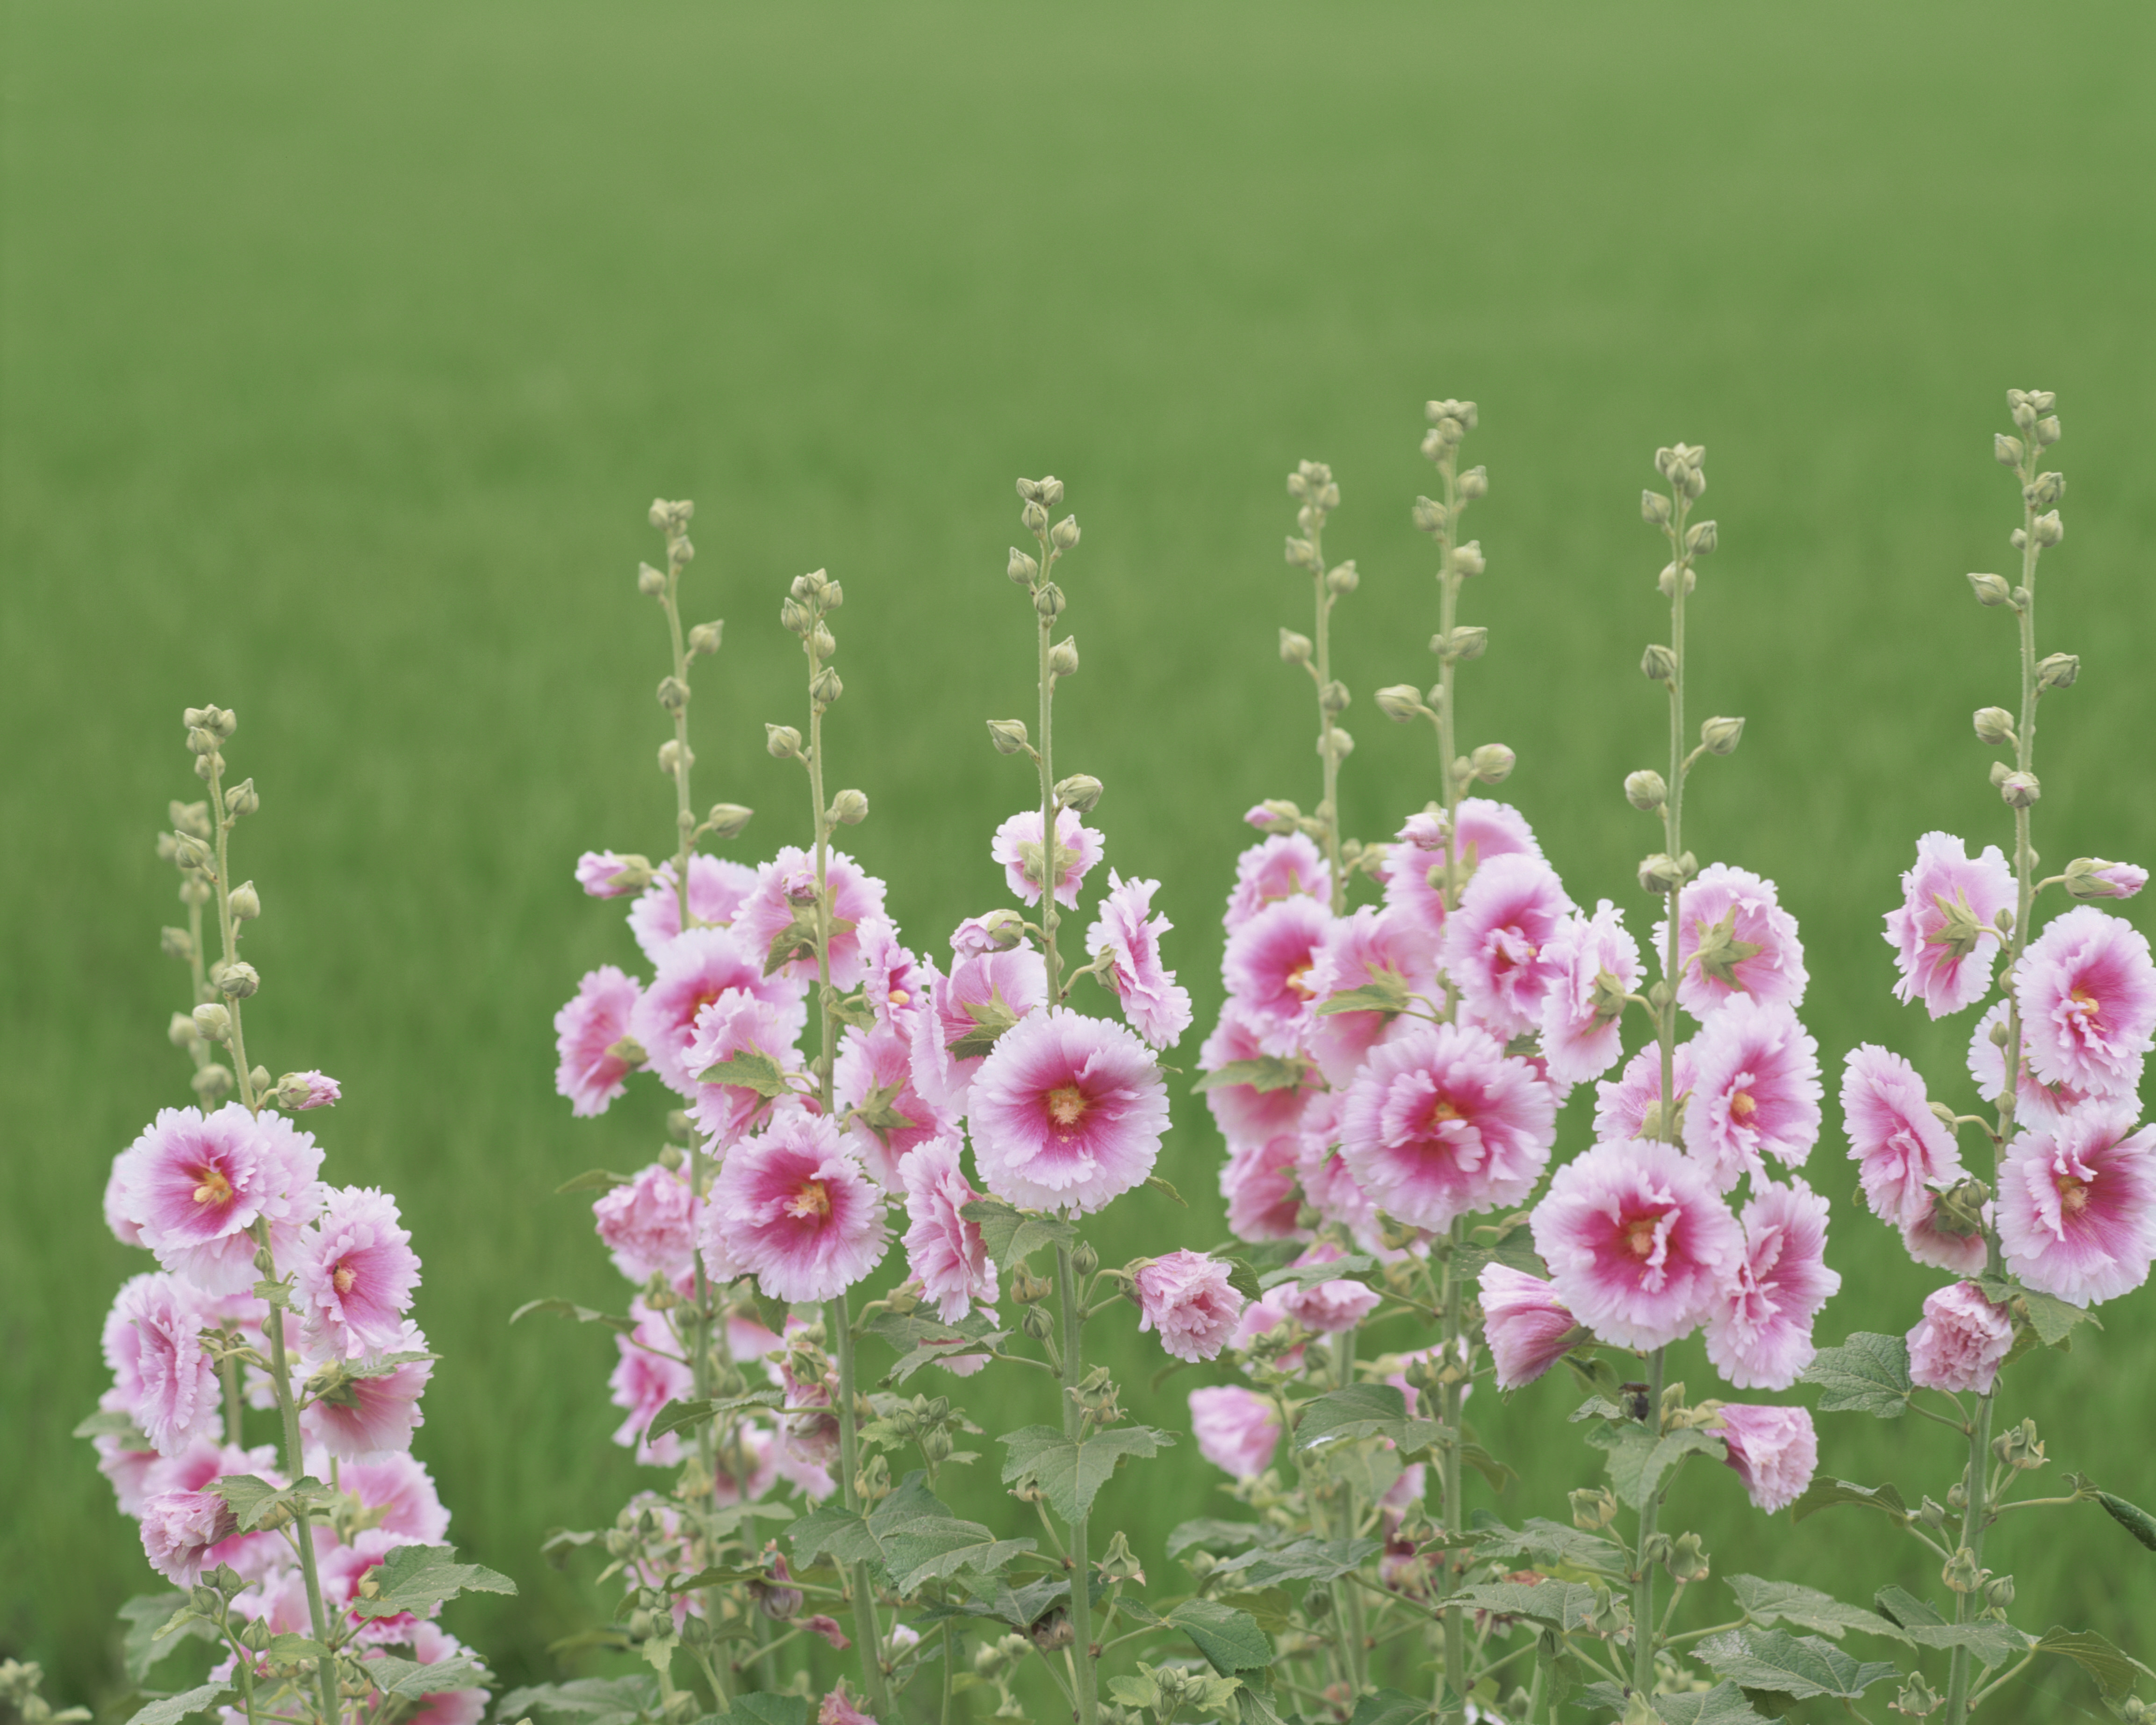 Hollyhock flowers (Alcea rosea) in field, close-up.